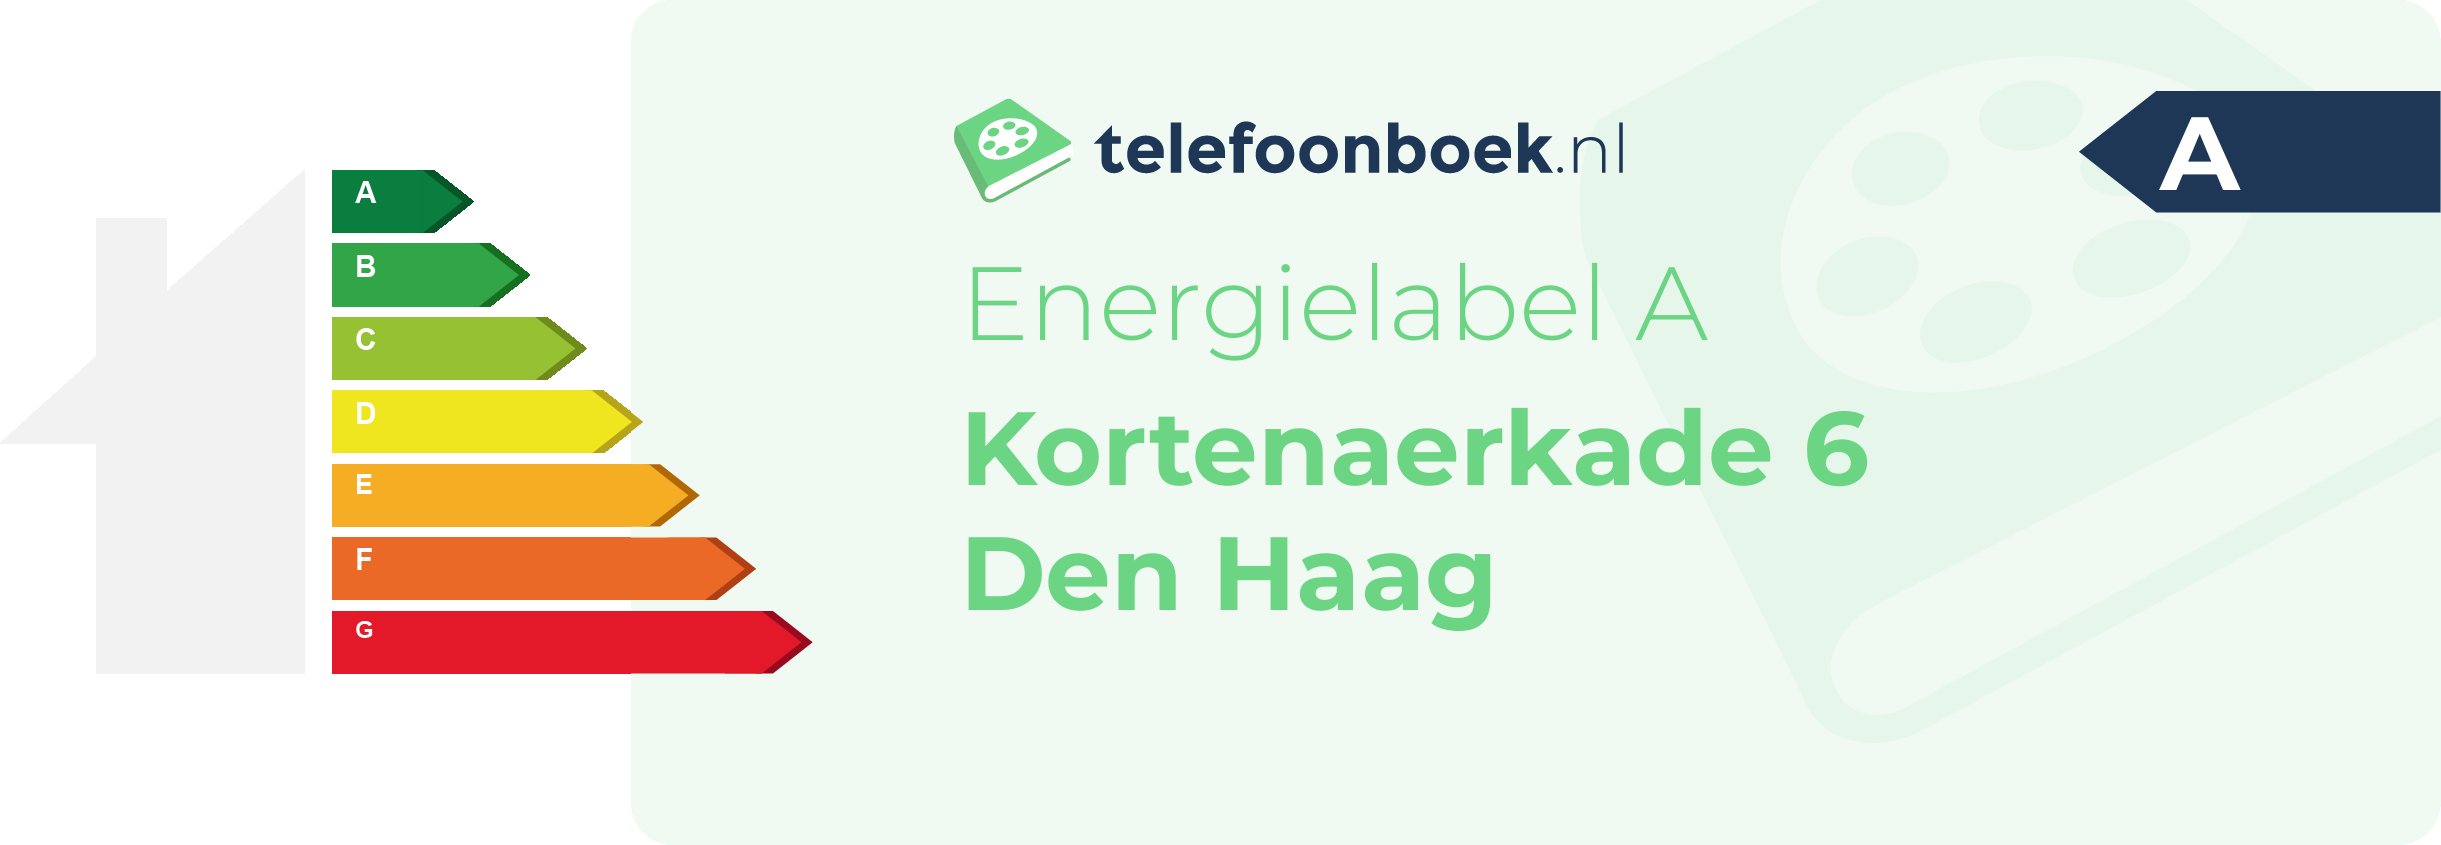 Energielabel Kortenaerkade 6 Den Haag